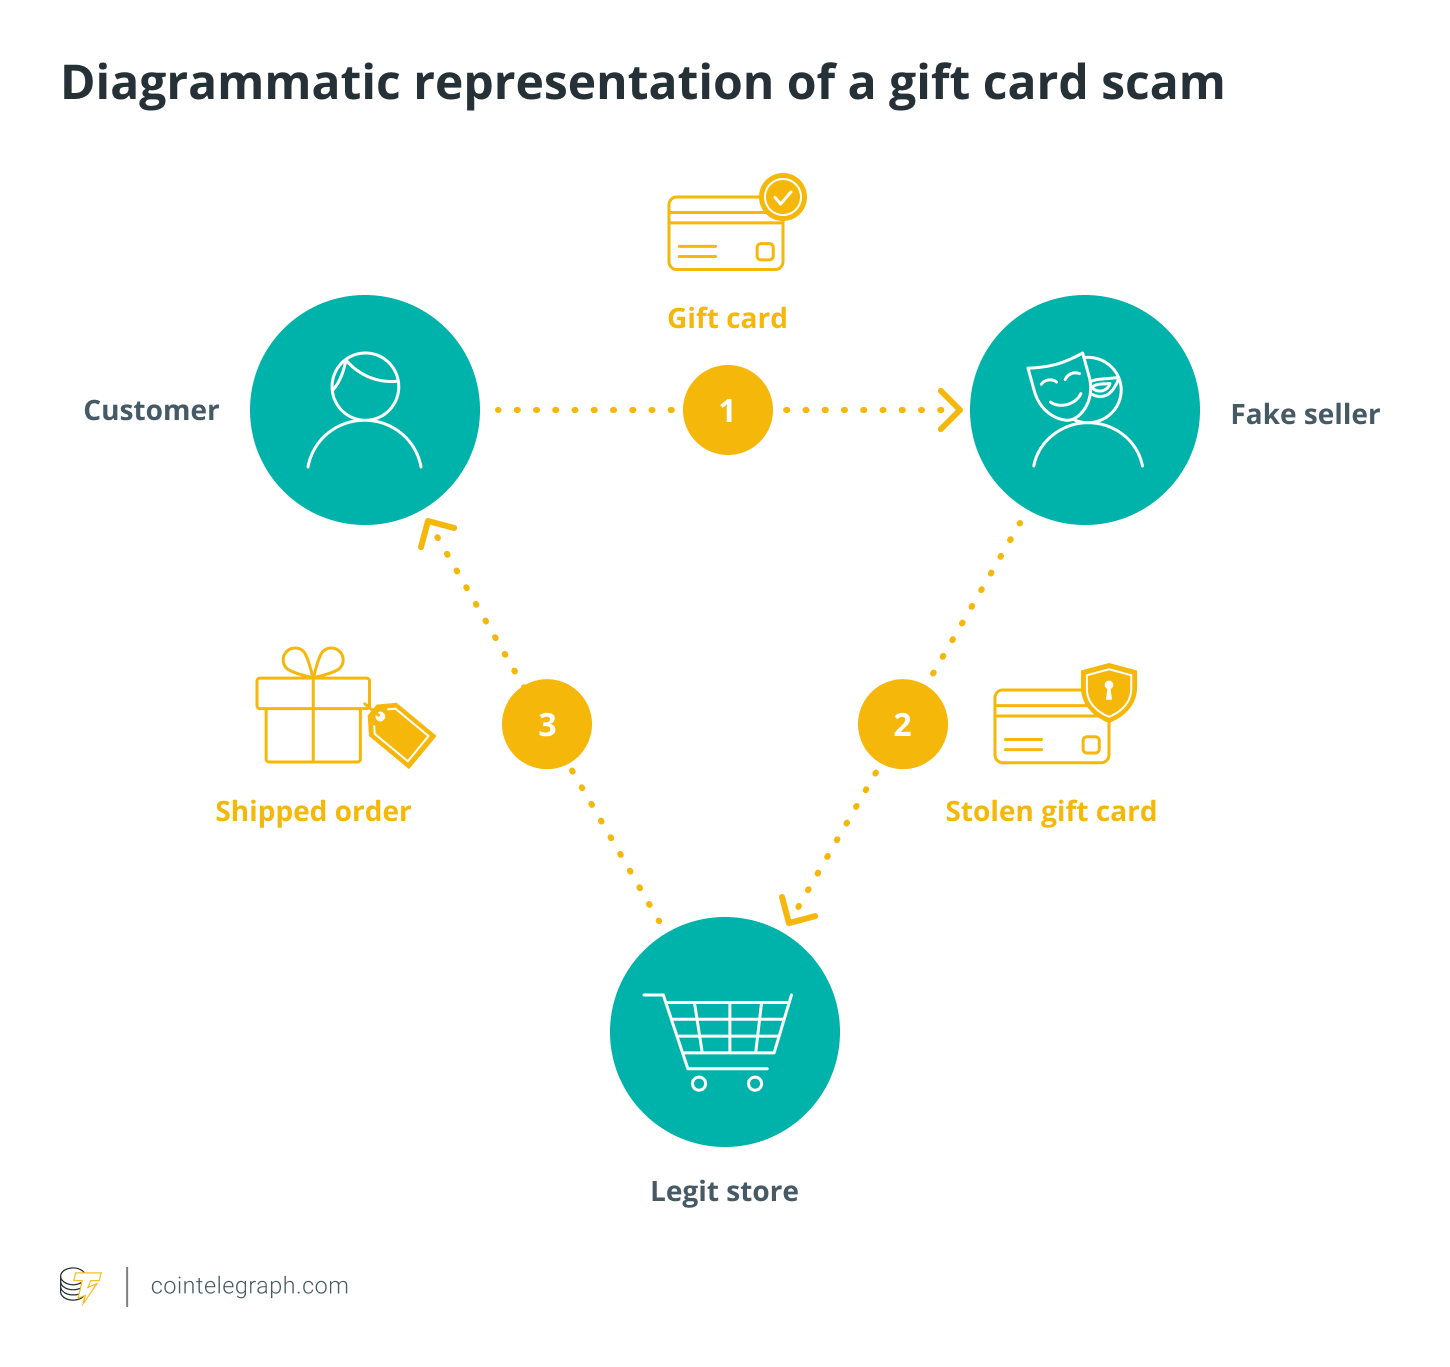 Diagrammatic representation of a gift card scam